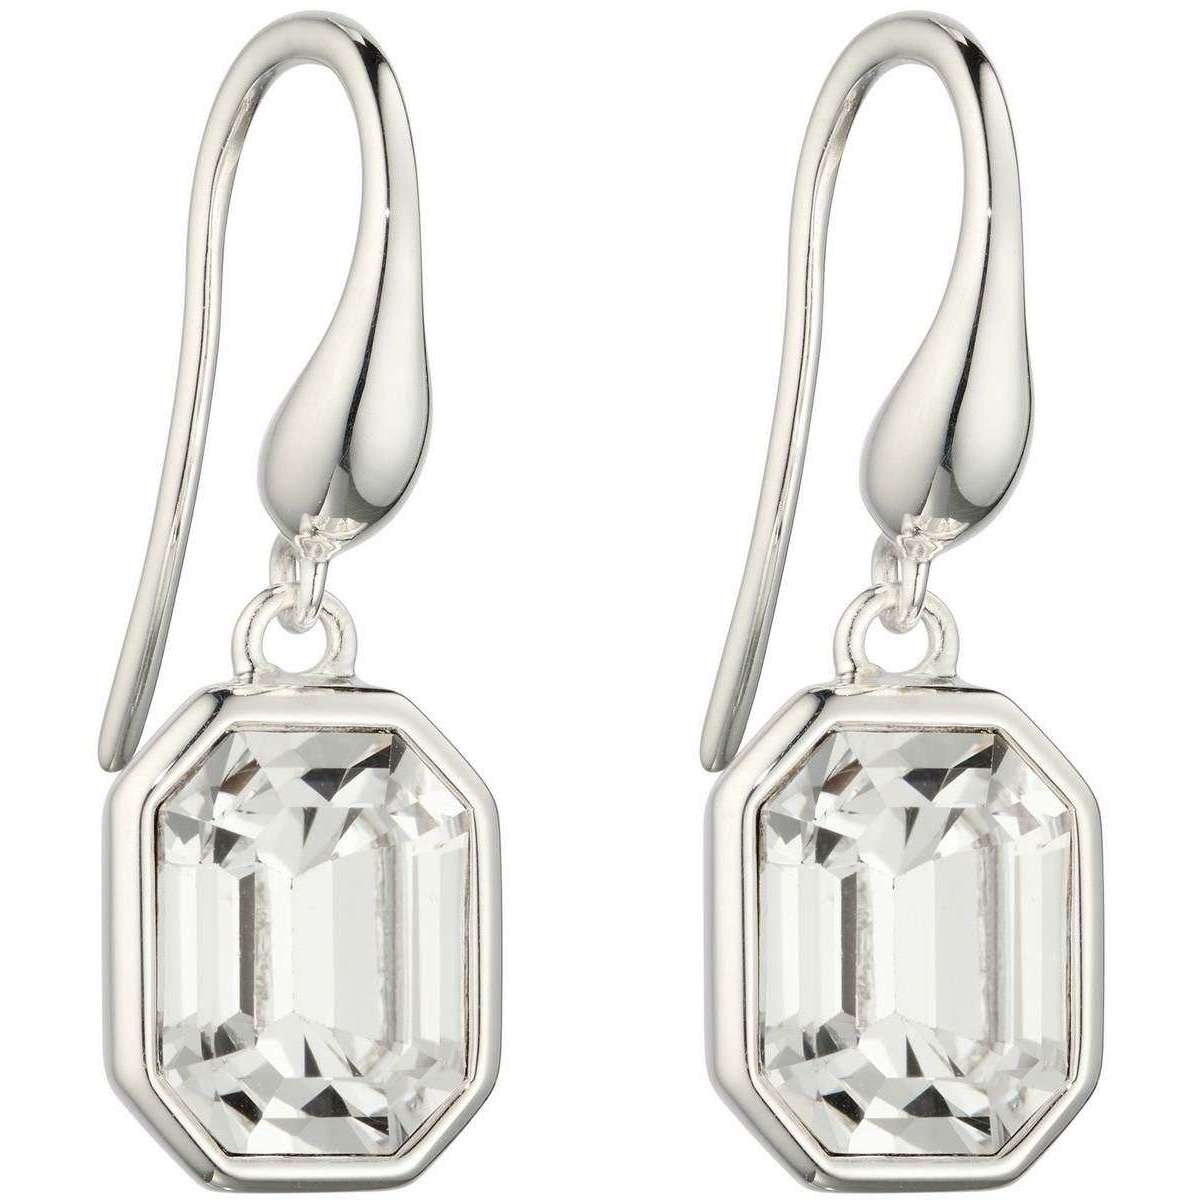 Elements Silver Elonged Octagon Clear Crystal Drop Earrings - Silver/Clear